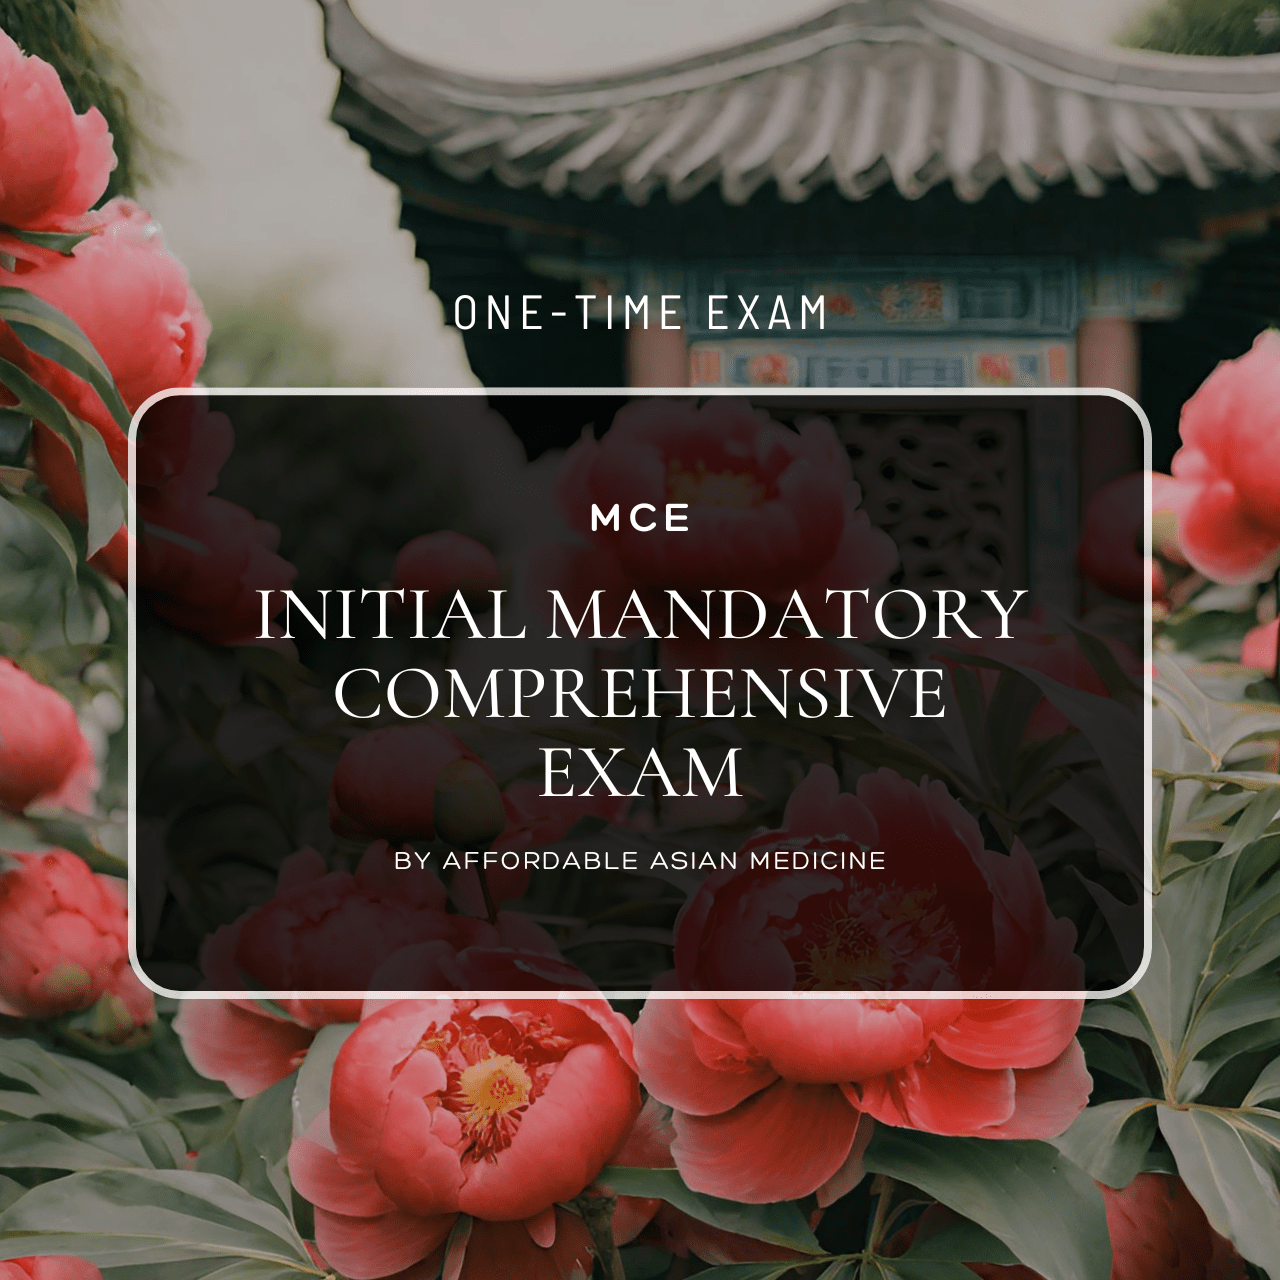 Initial Mandatory Comprehensive Exam